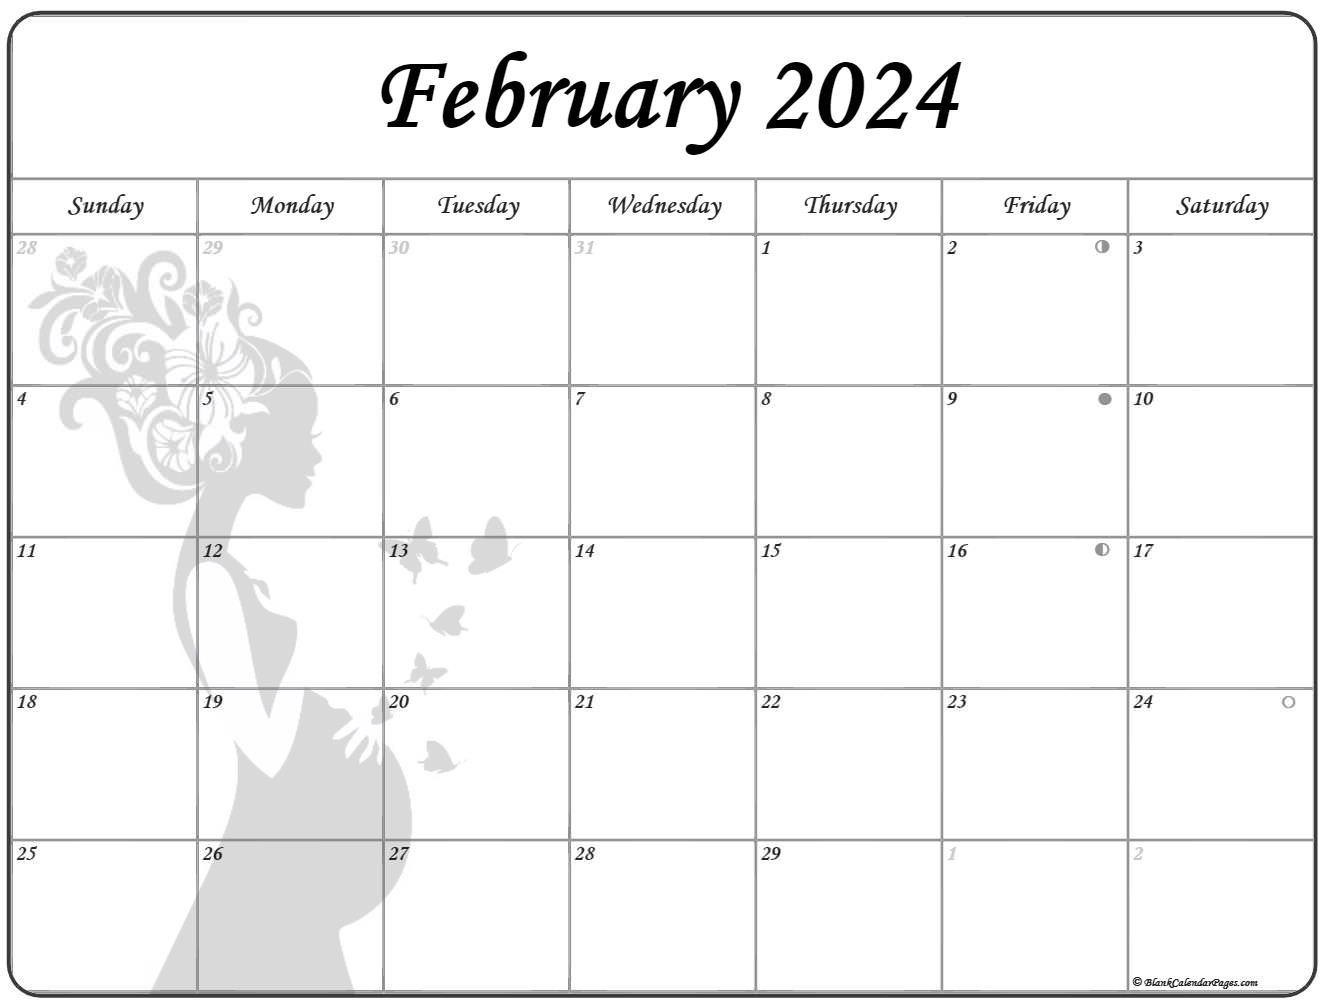 February 2020 Pregnancy Calendar | Fertility Calendar1767 x 1339